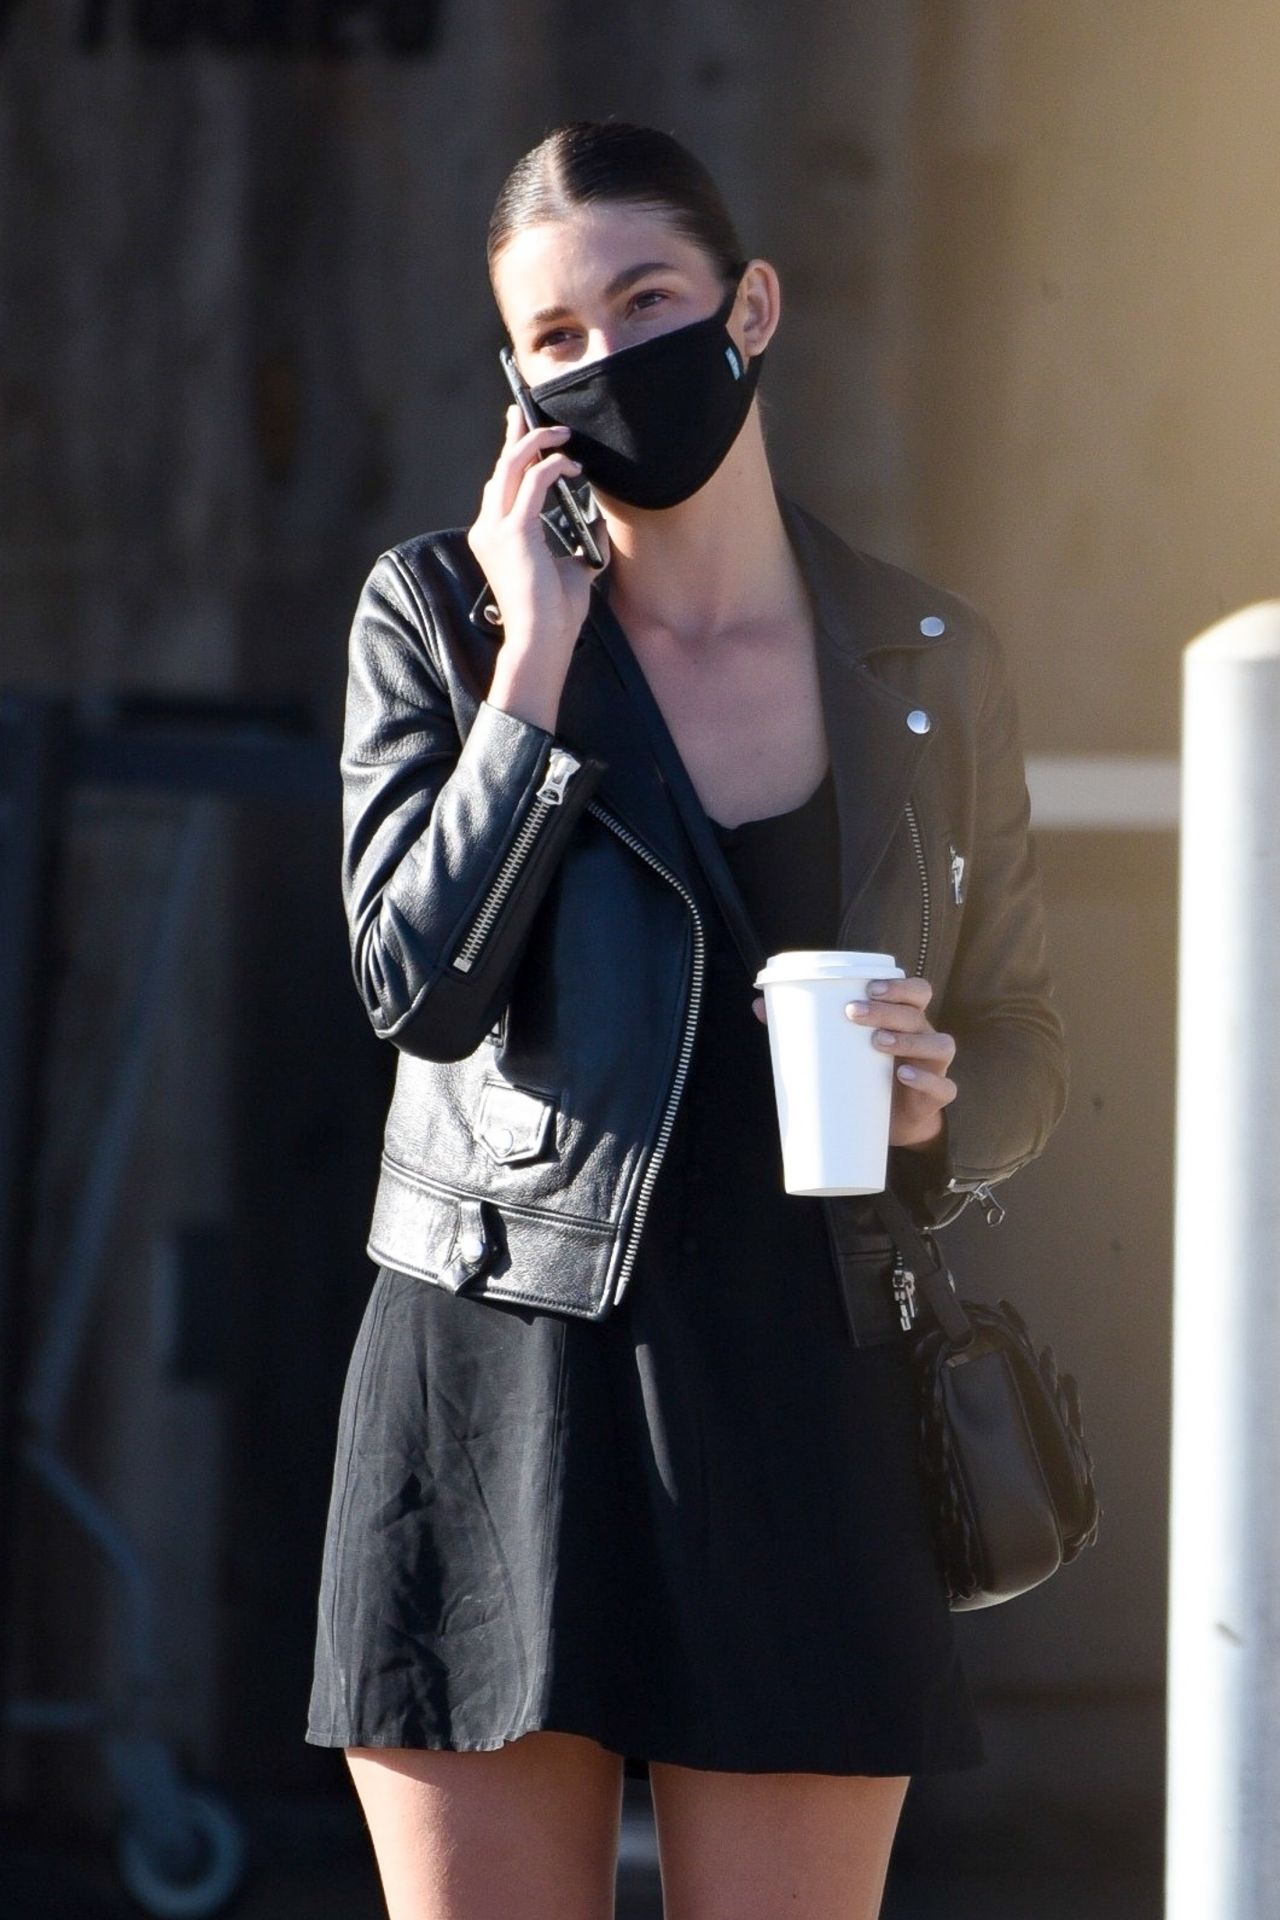 Camila Morrone Wears Silk, Black Dress While Shopping in Hollywood: Photo  4490240, Camila Morrone Photos